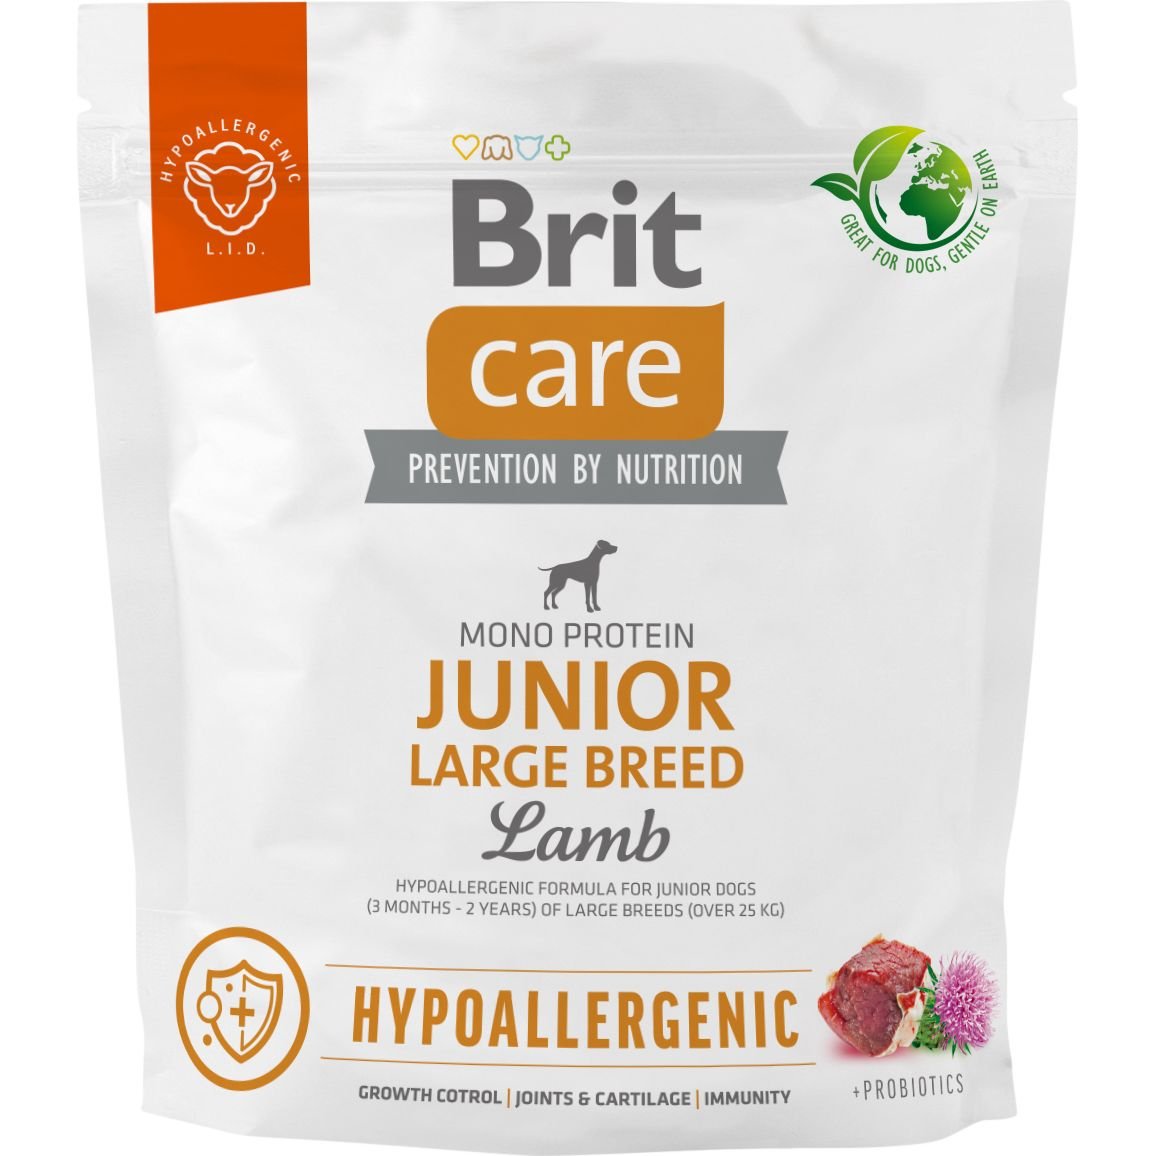 Сухий корм для молодих собак великих порід Brit Care Dog Hypoallergenic Junior Large Breed, гіпоалергенний, з ягням, 1 кг - фото 1